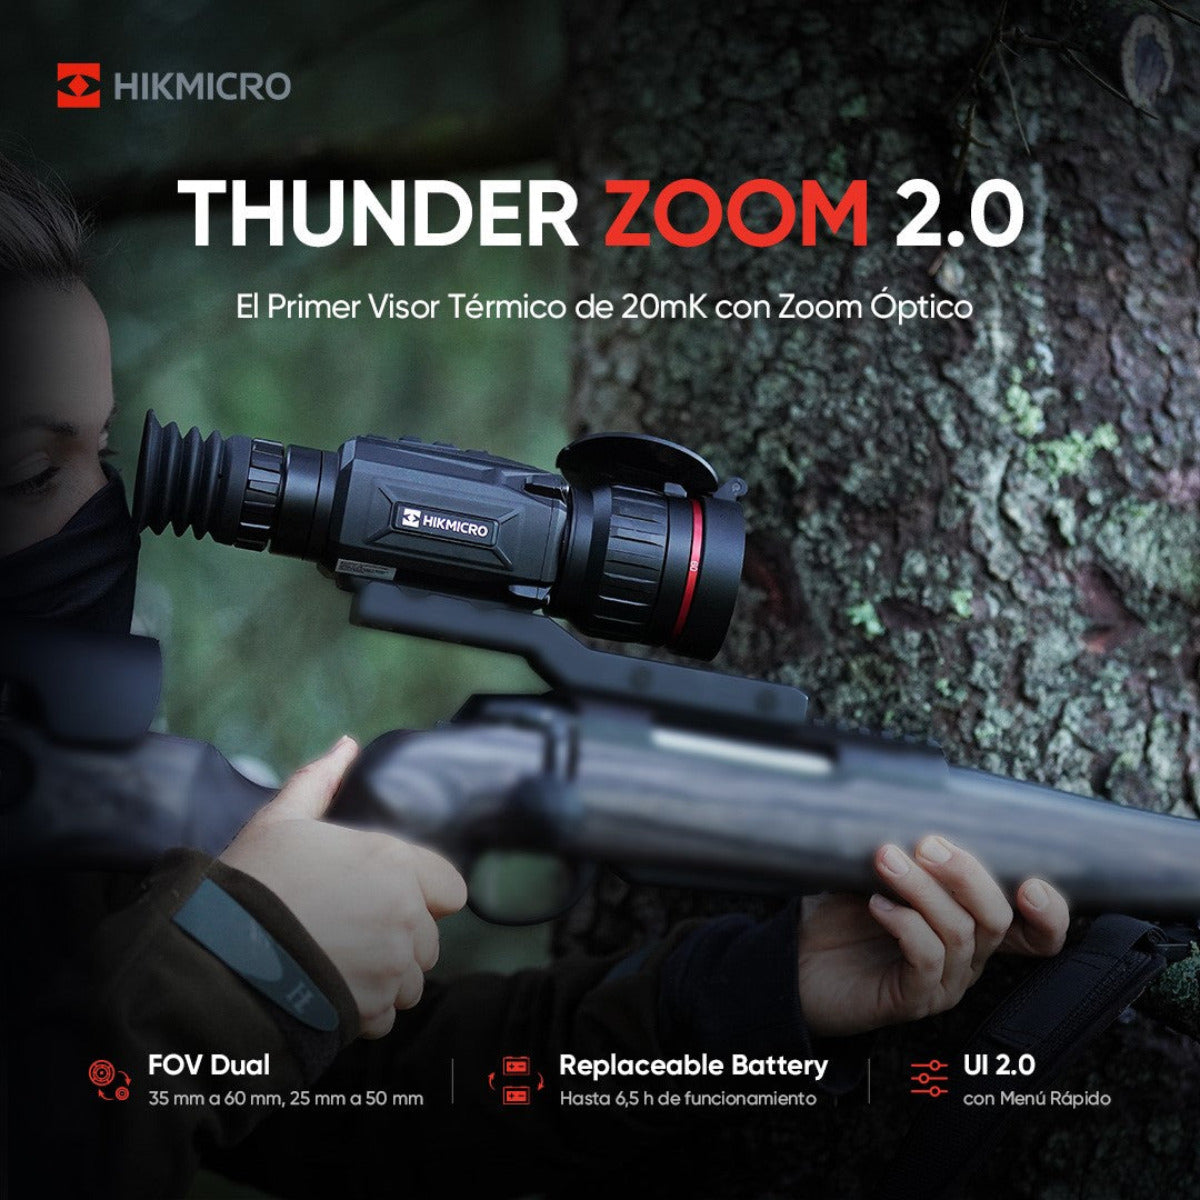 Visor Hikmicro Thunder Zoom TH50Z 2.0